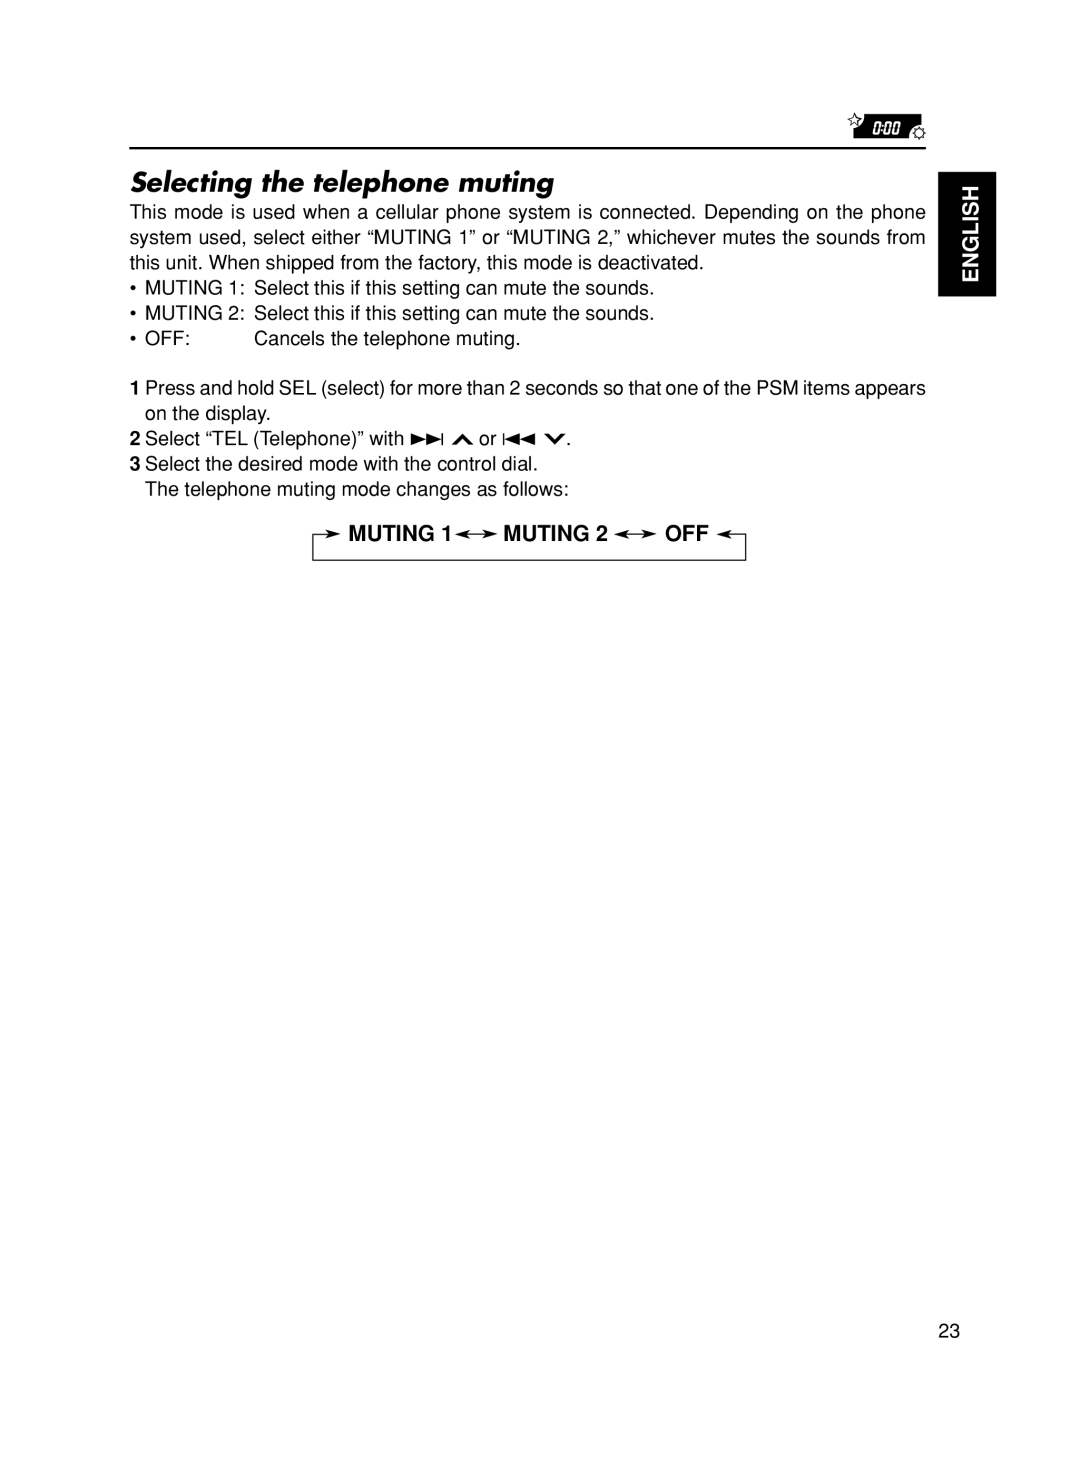 JVC KS-FX90 manual Selecting the telephone muting, MUTING 1MUTING 2 OFF, English 